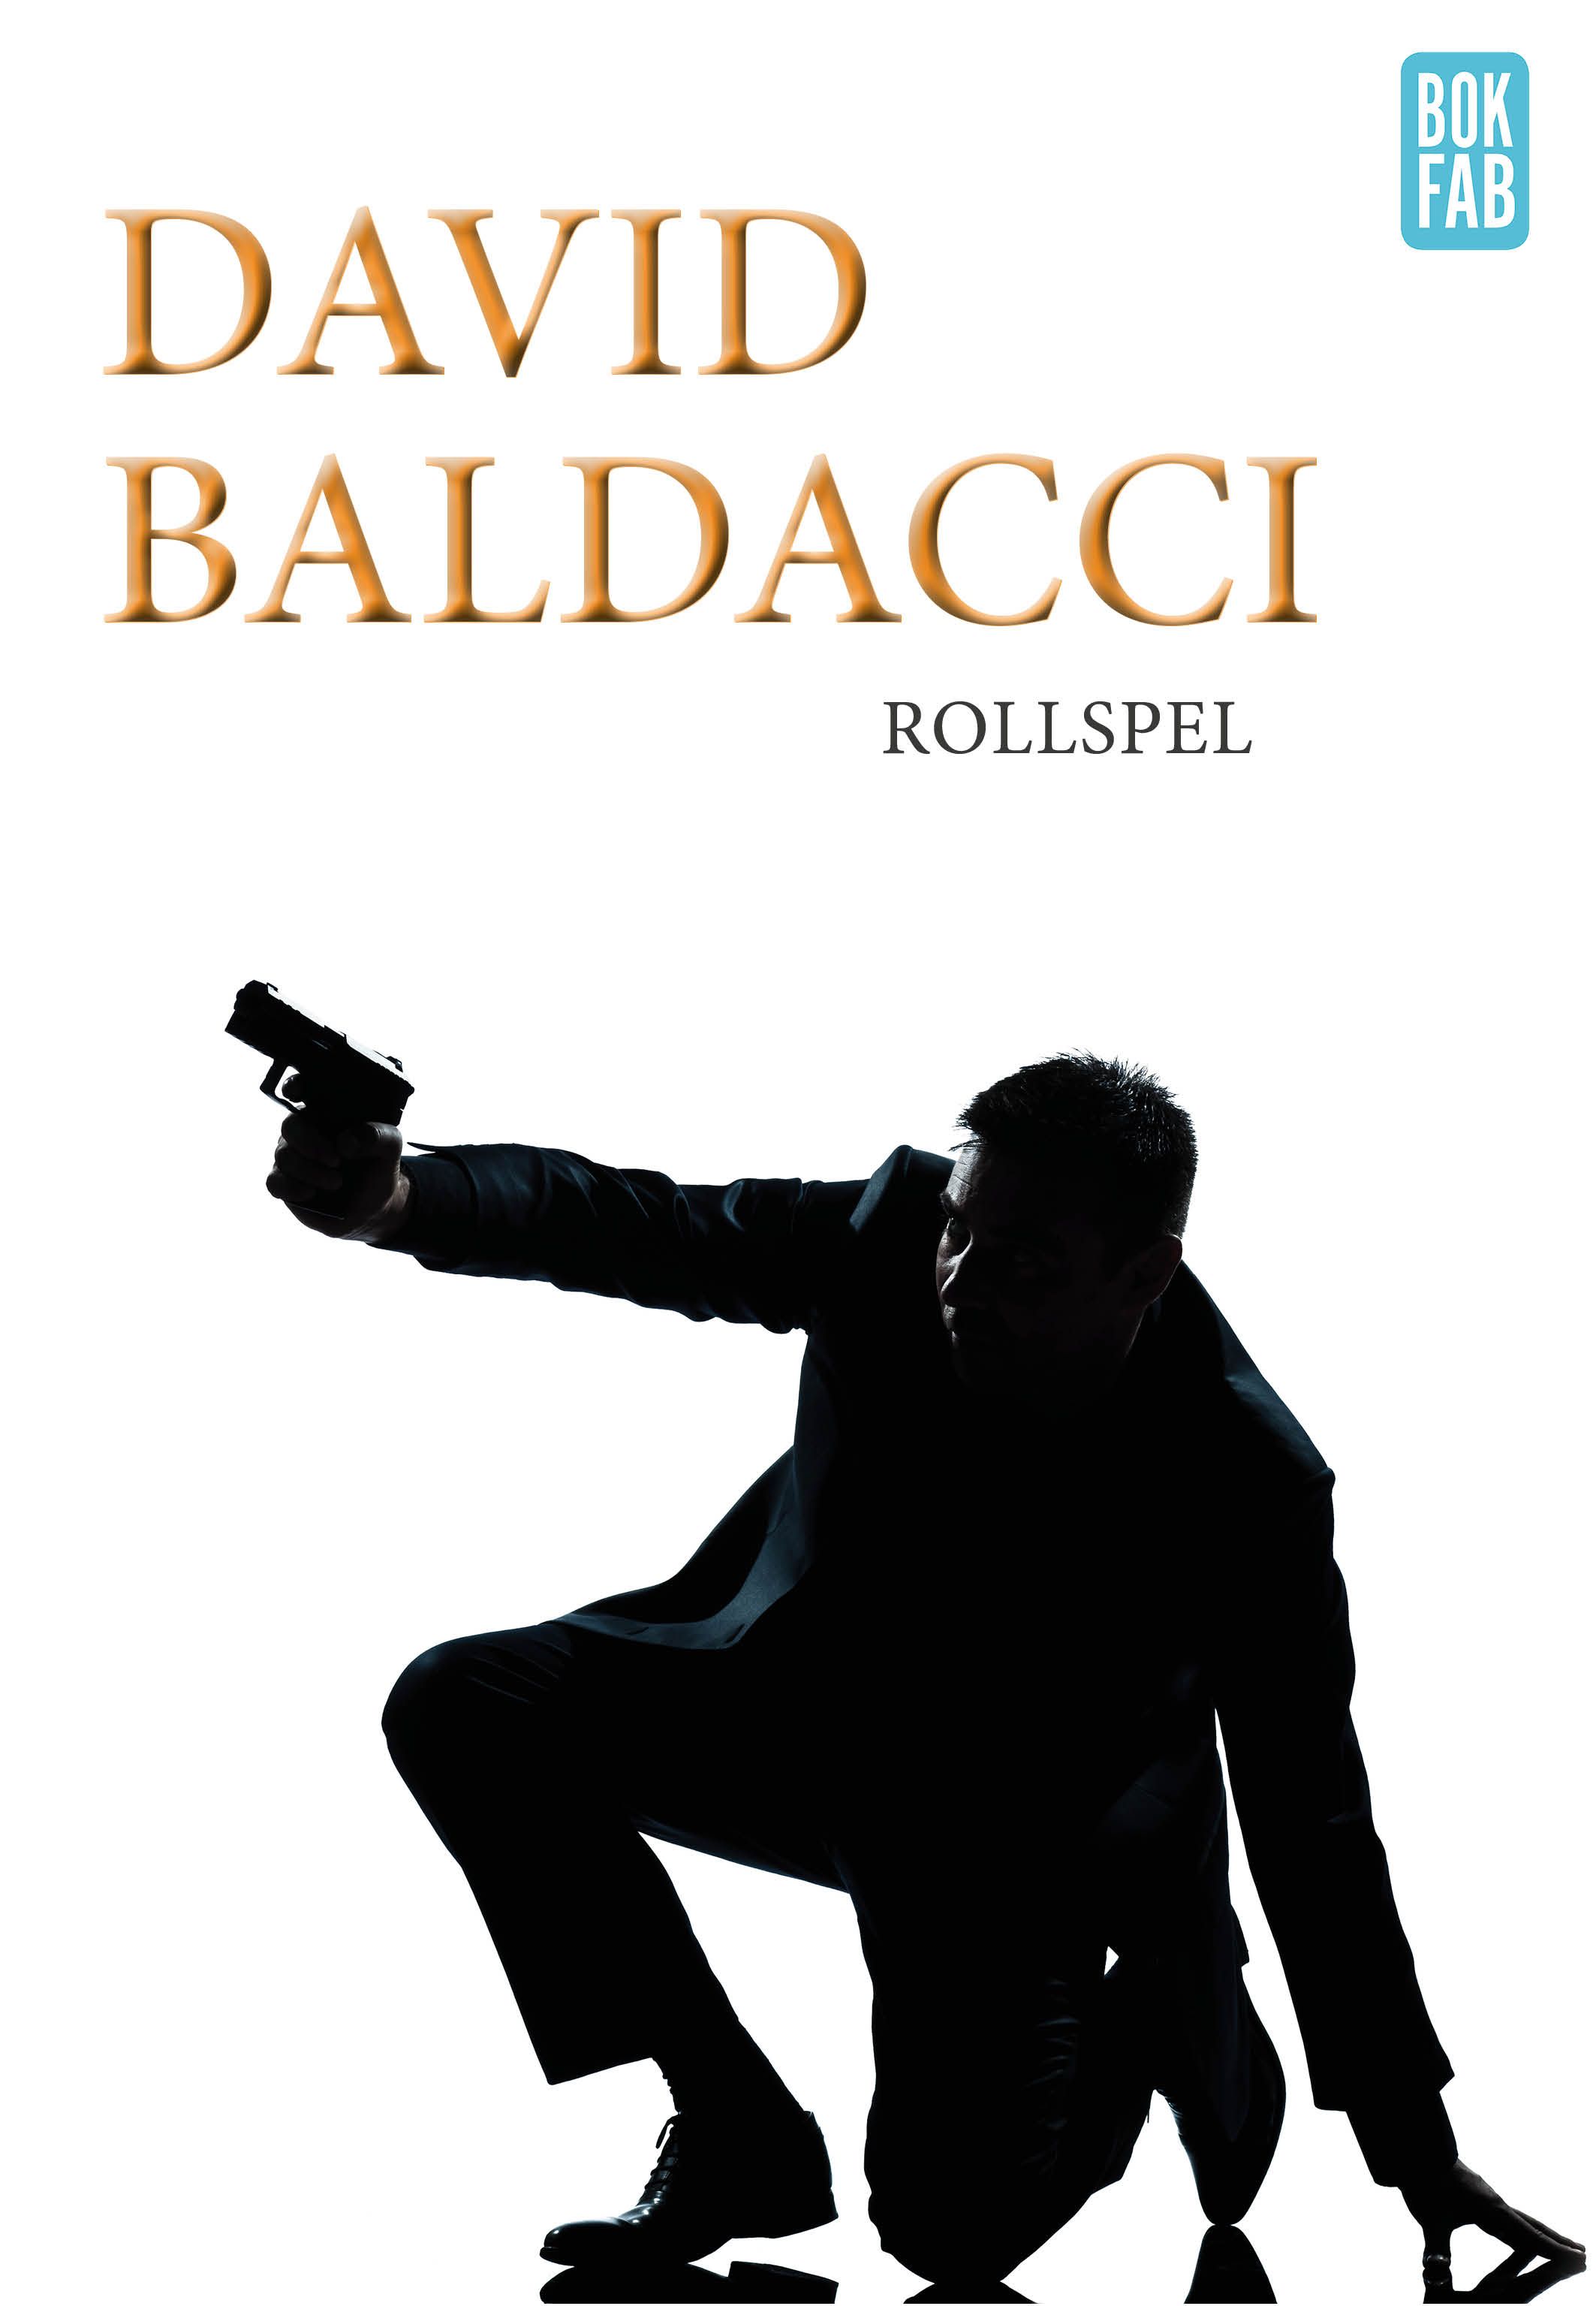 Rollspel, e-bog af David Baldacci